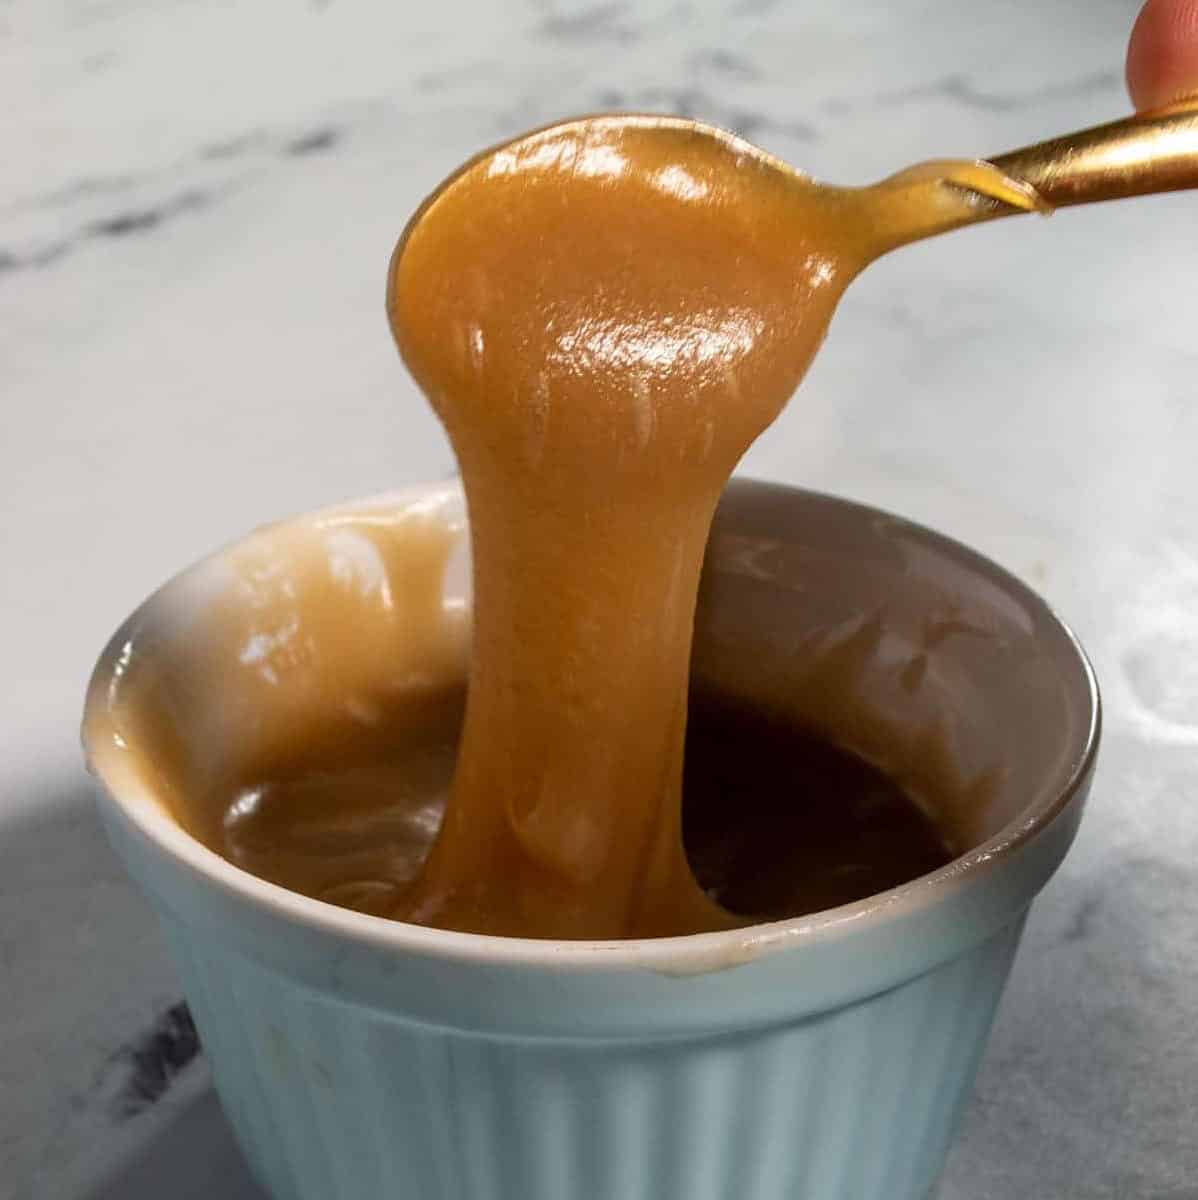  Make your vegan sundaes even more divine with this homemade vegan dulce de leche caramel sauce.